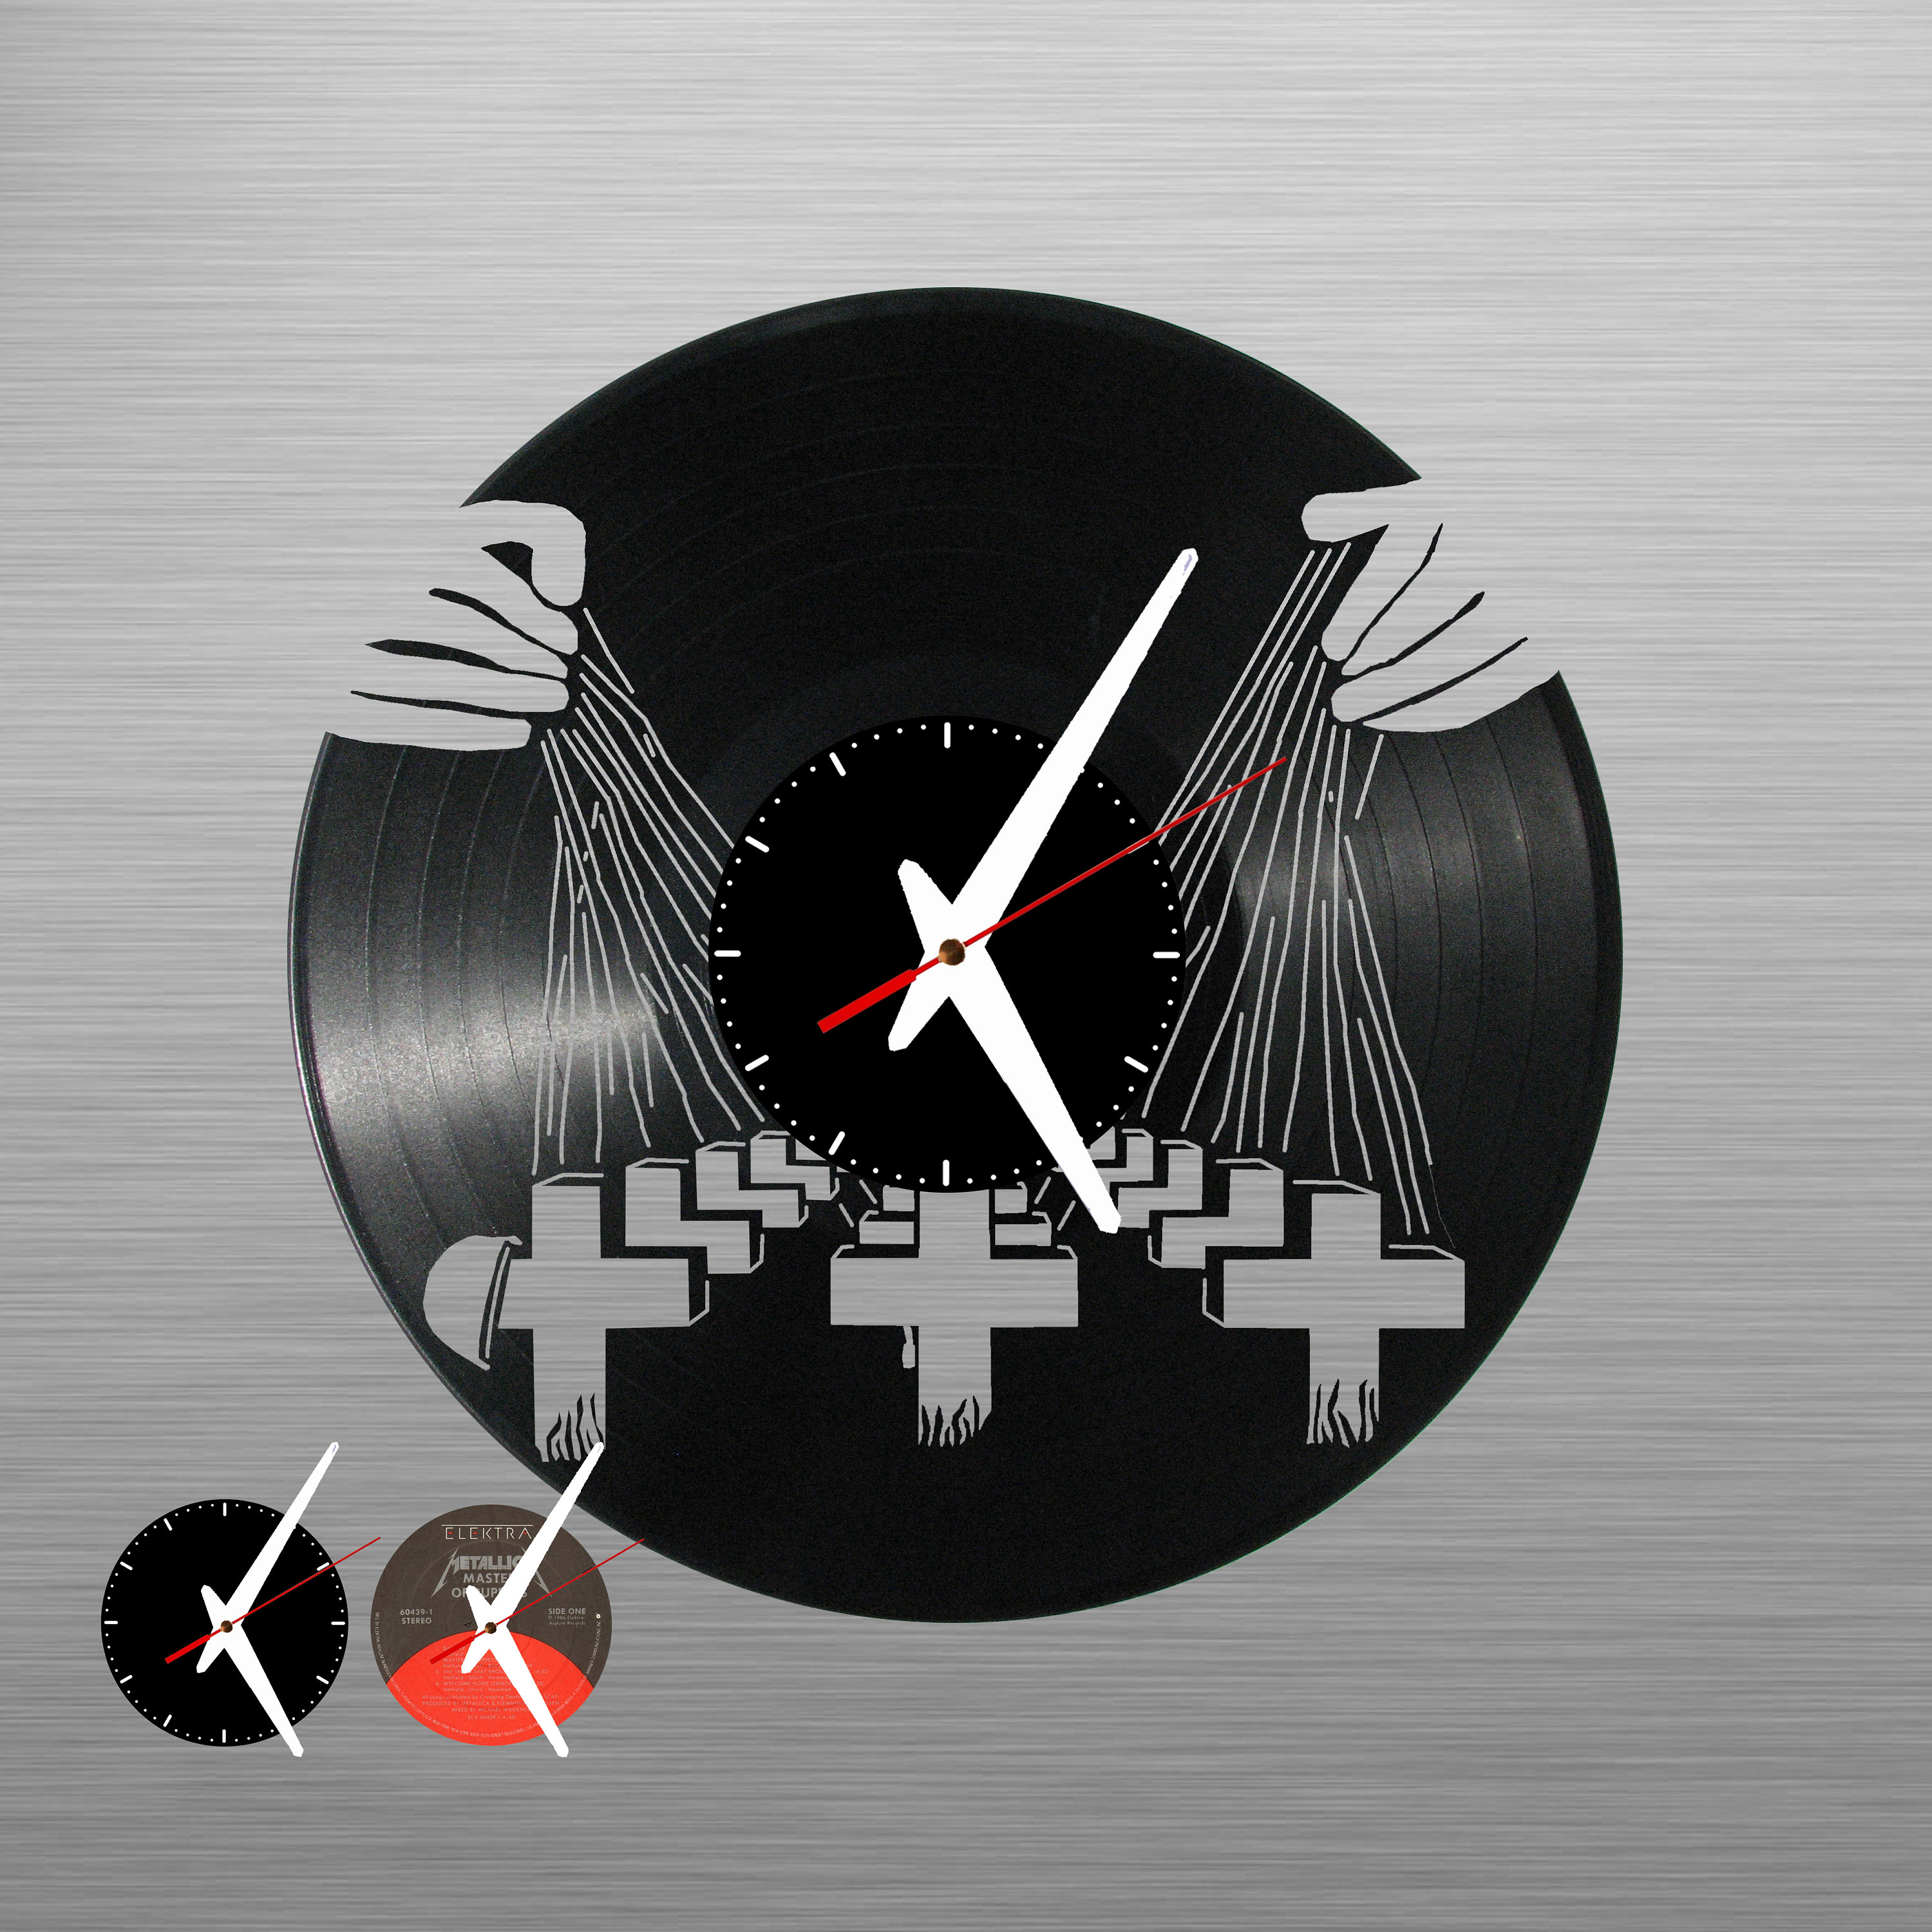 METALLICA Vinyl Clock - Vinyl Record Wall Clock Art 3 - Vinyl Planet Art